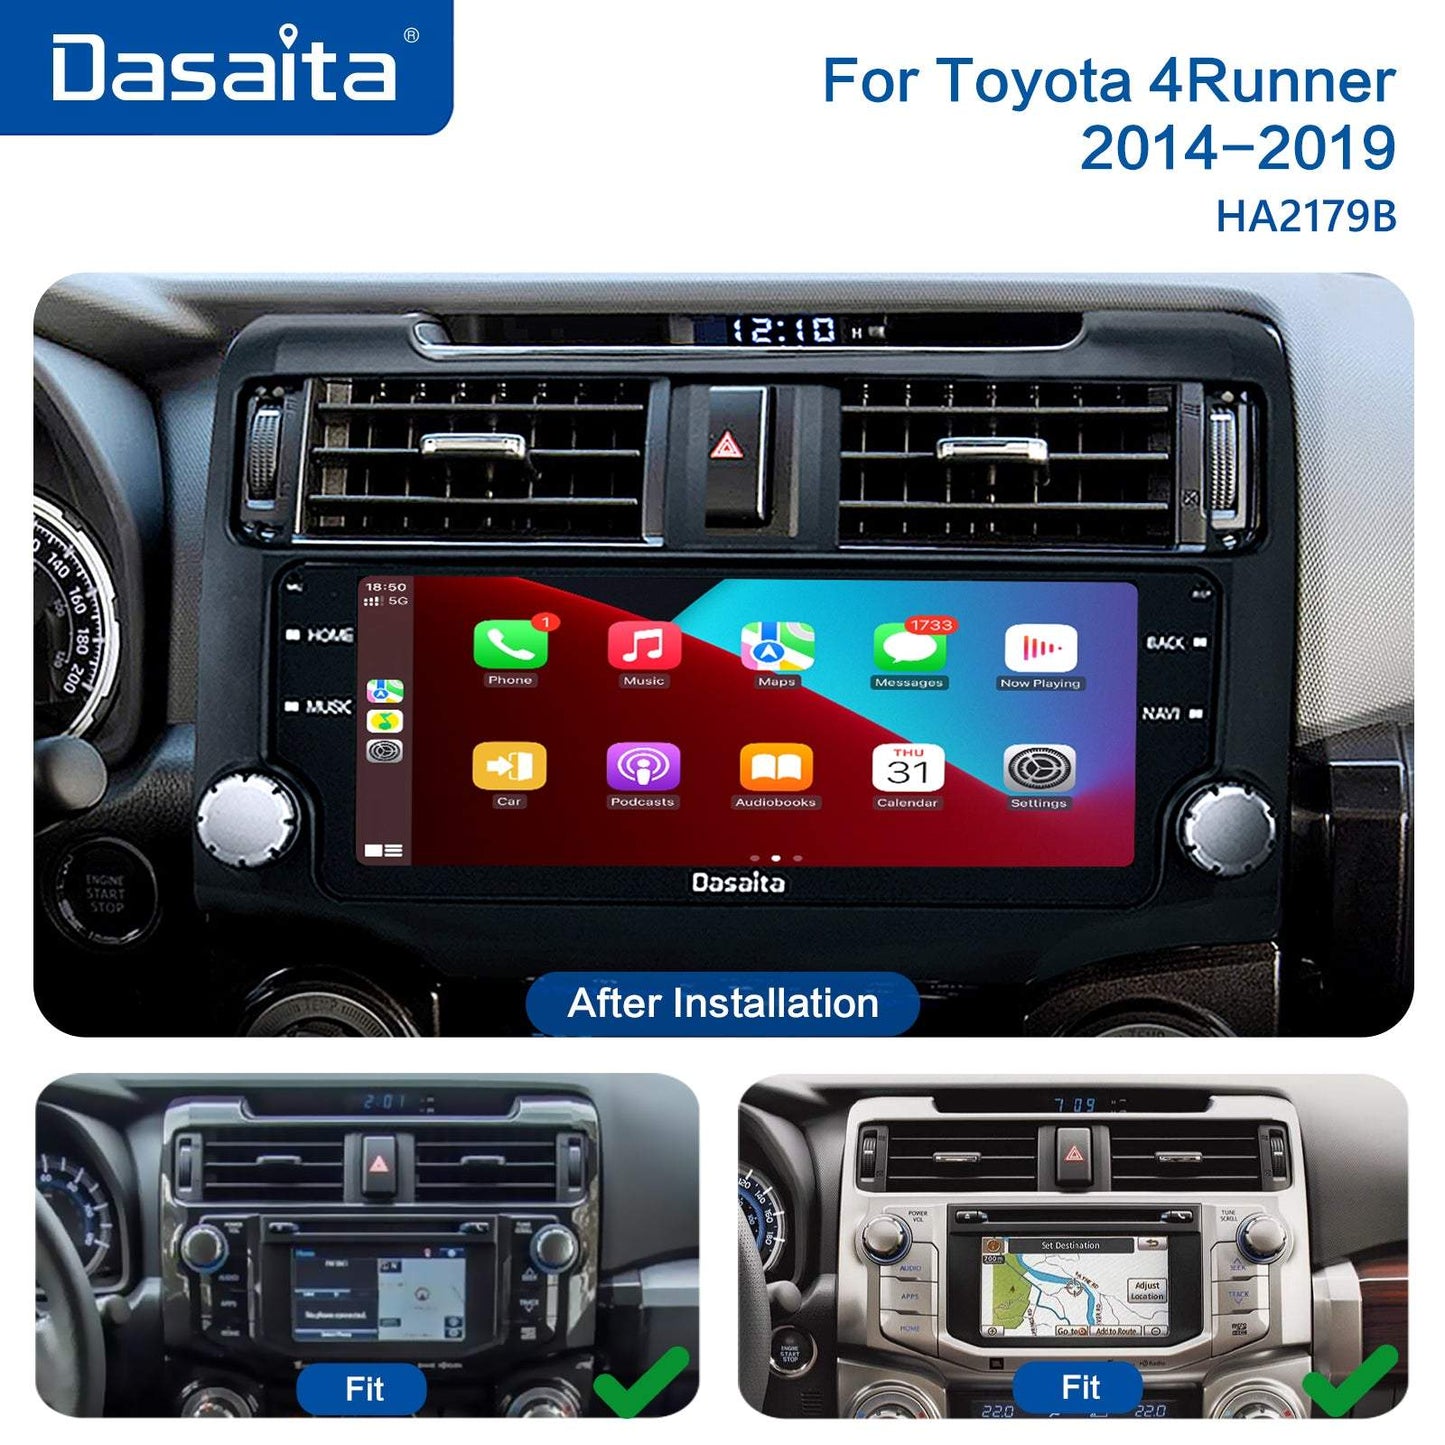 Dasaita MAX11 Toyota 4Runner 2014 2015 2016 2017 2018 Car Stereo 10.25 Inch Carplay Android Auto PX6 4G+64G Android11 1280*480 DSP AHD Radio